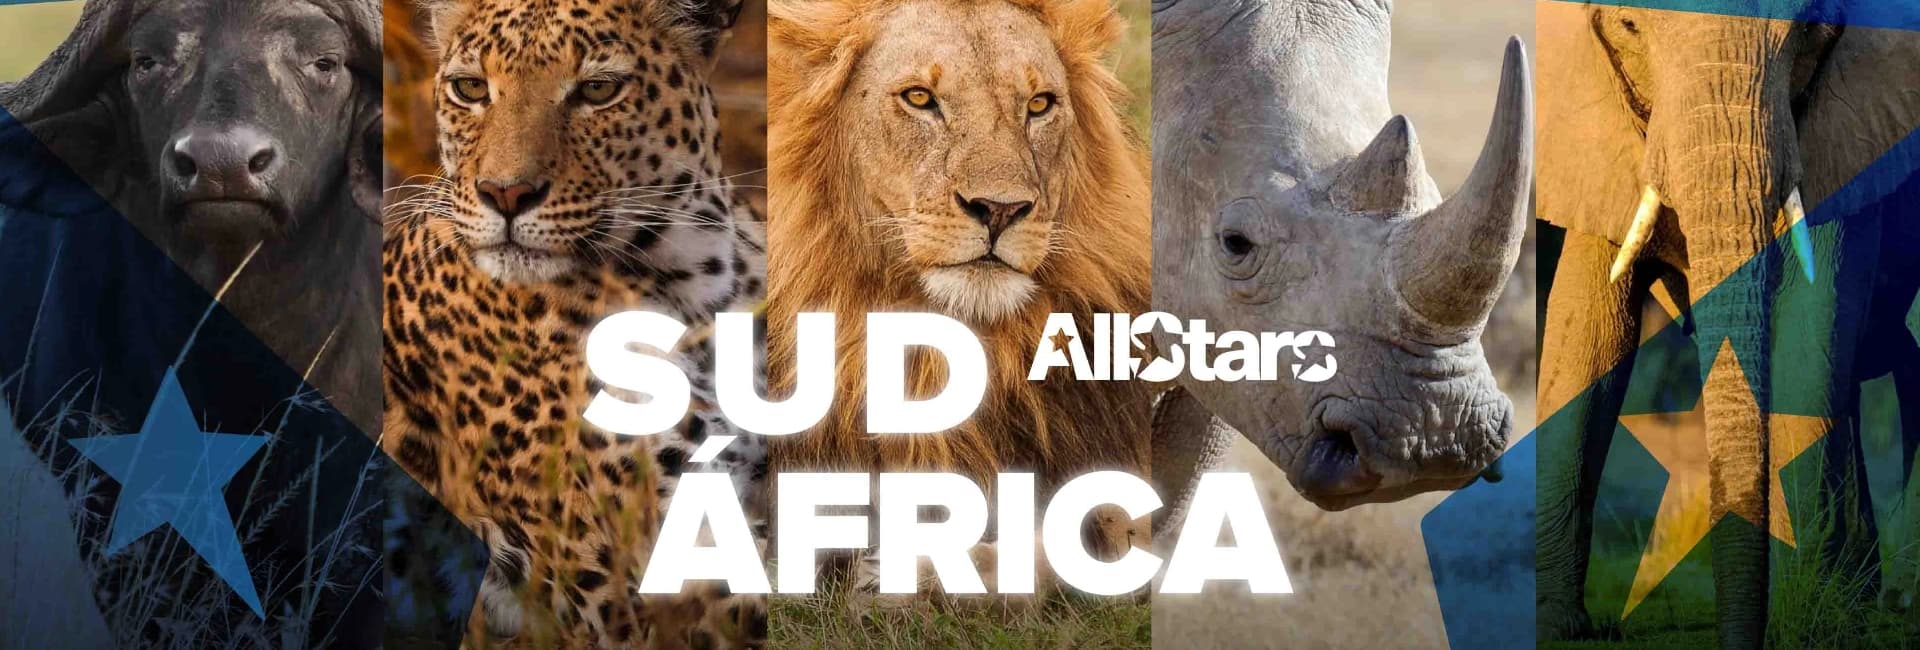 Sud África - AllStars